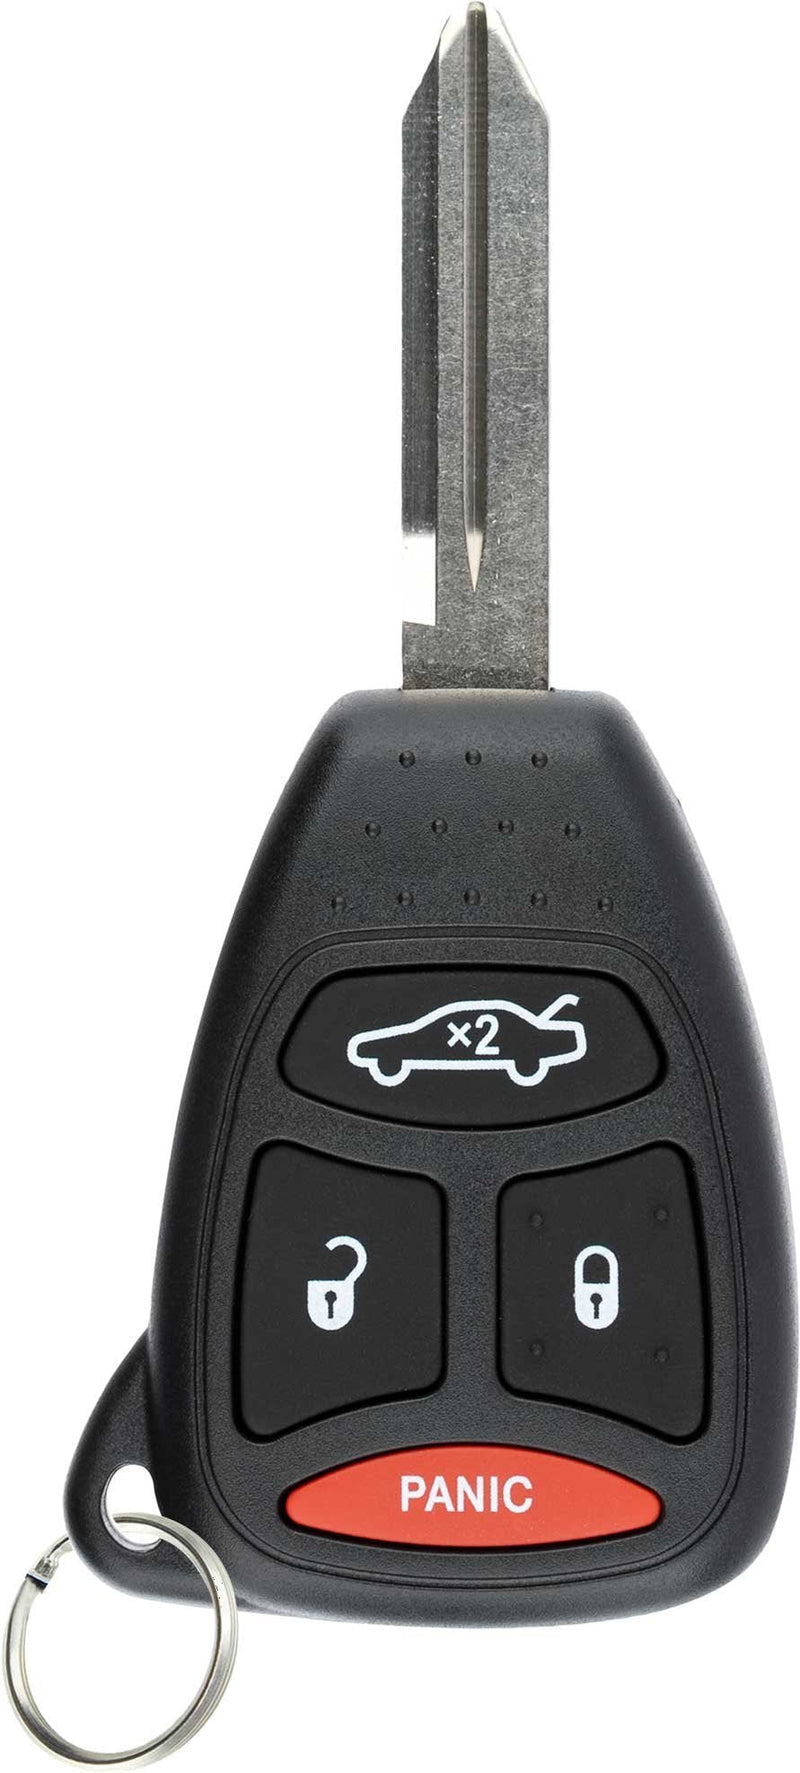  [AUSTRALIA] - KeylessOption Keyless Entry Remote Control Uncut Ignition Car Key Fob Replacement for KOBDT04A